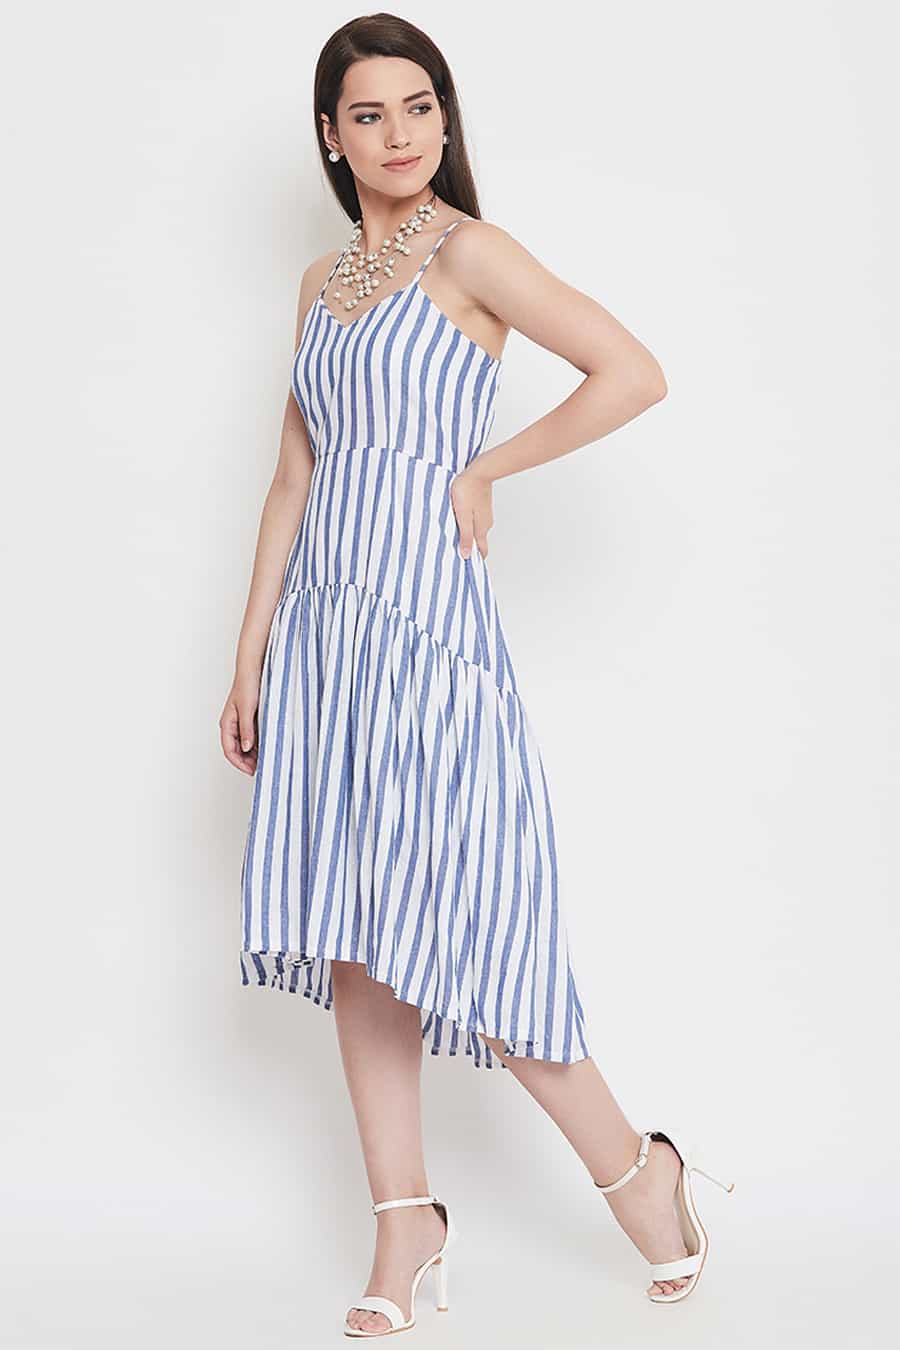 Blue And White Stripe Dress Kovet Invogue